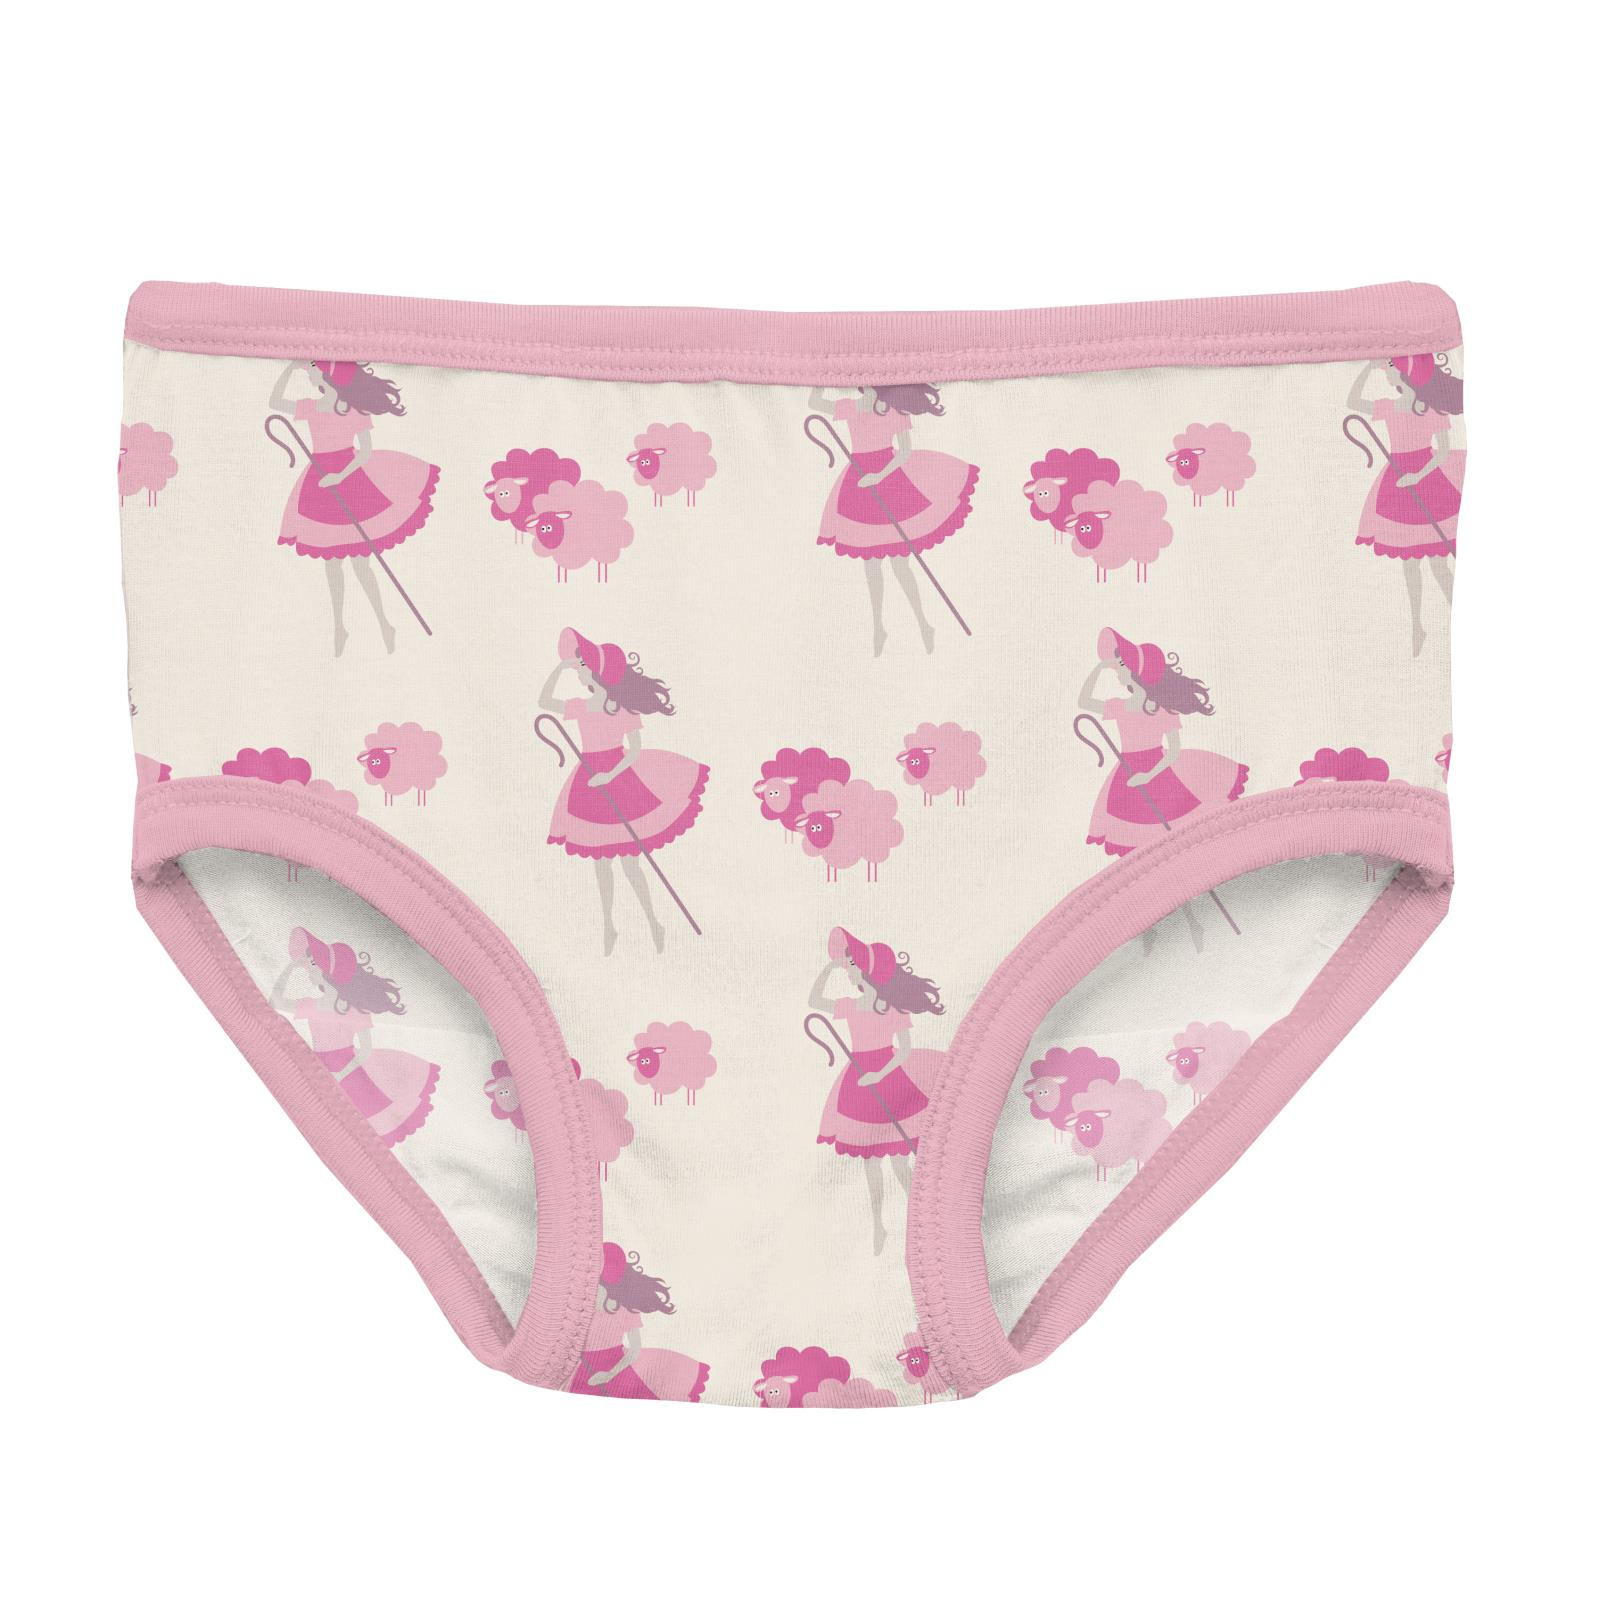 Print Girl's Underwear Set of 3 (Tulip Scales/Tulip/Little Bo Peep